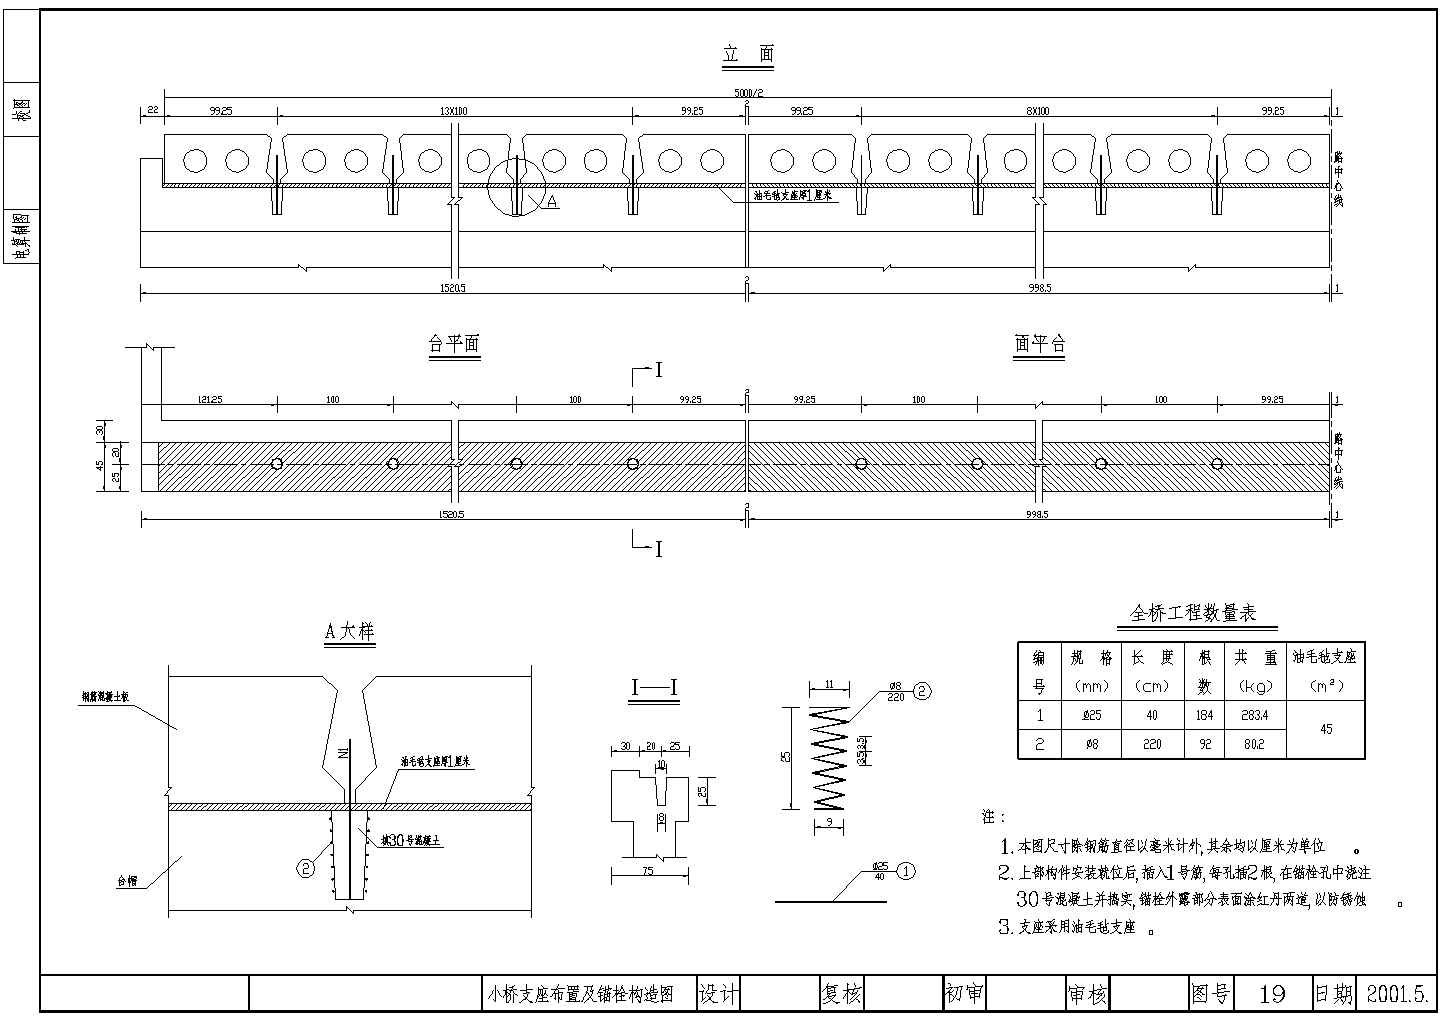 1-8m城市桥支座布置及锚栓构造节点详图设计